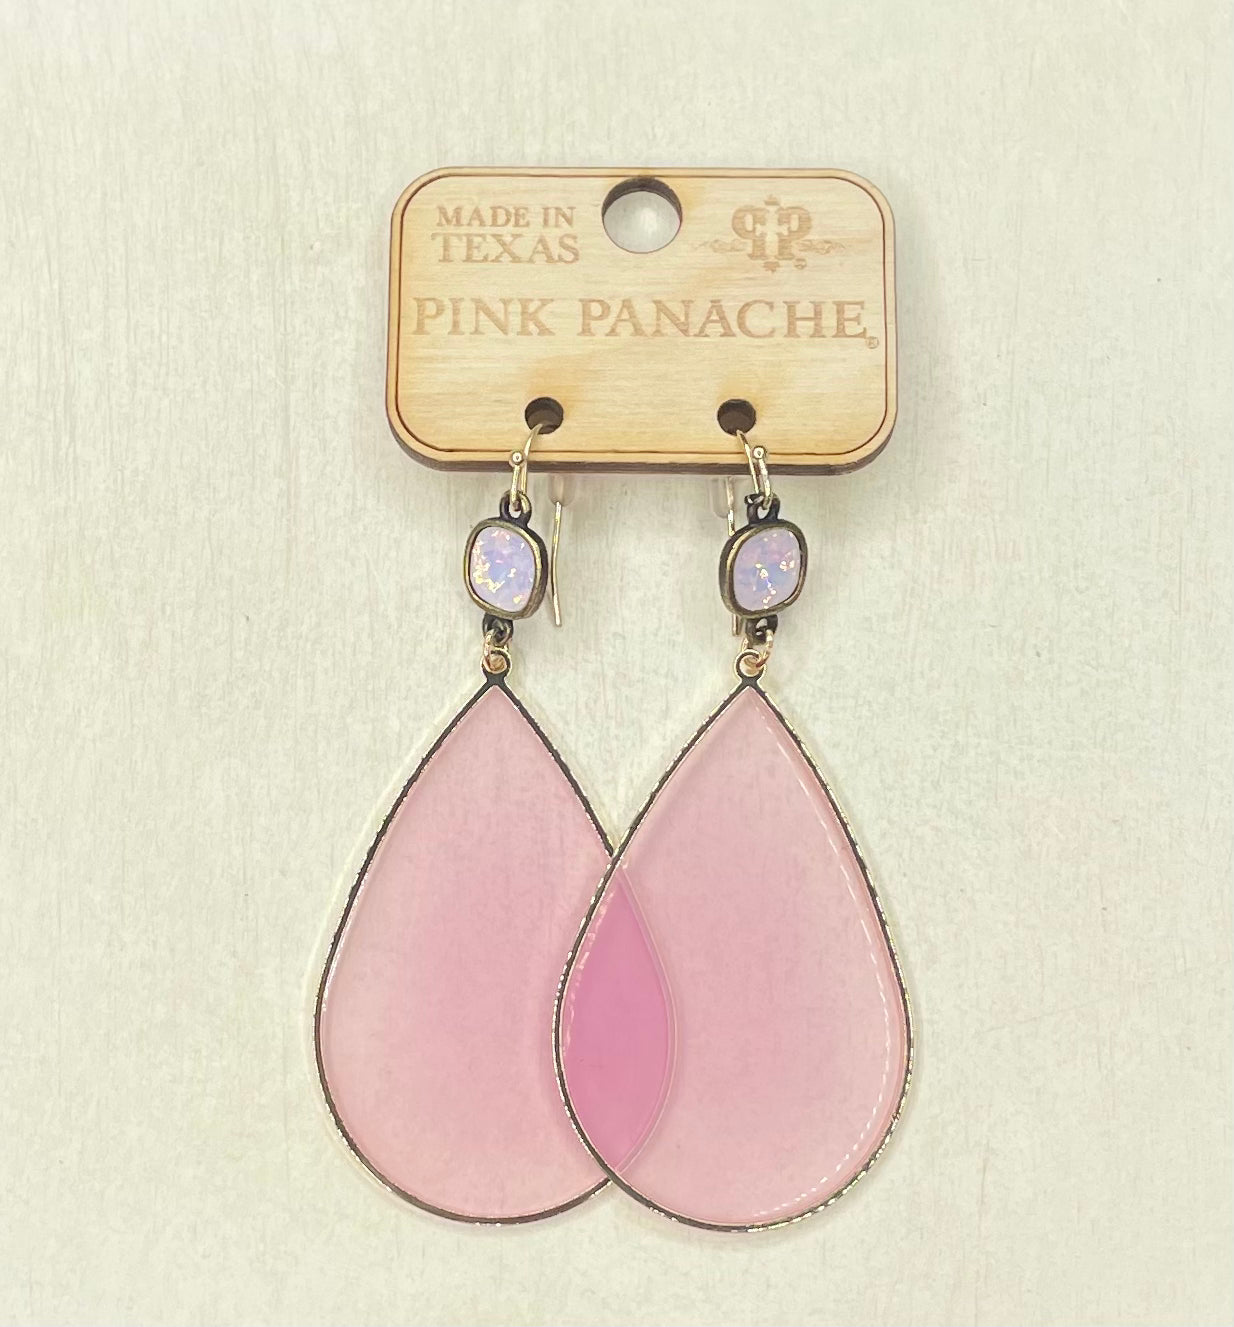 Pink Panache Earrings - 1CNC D182